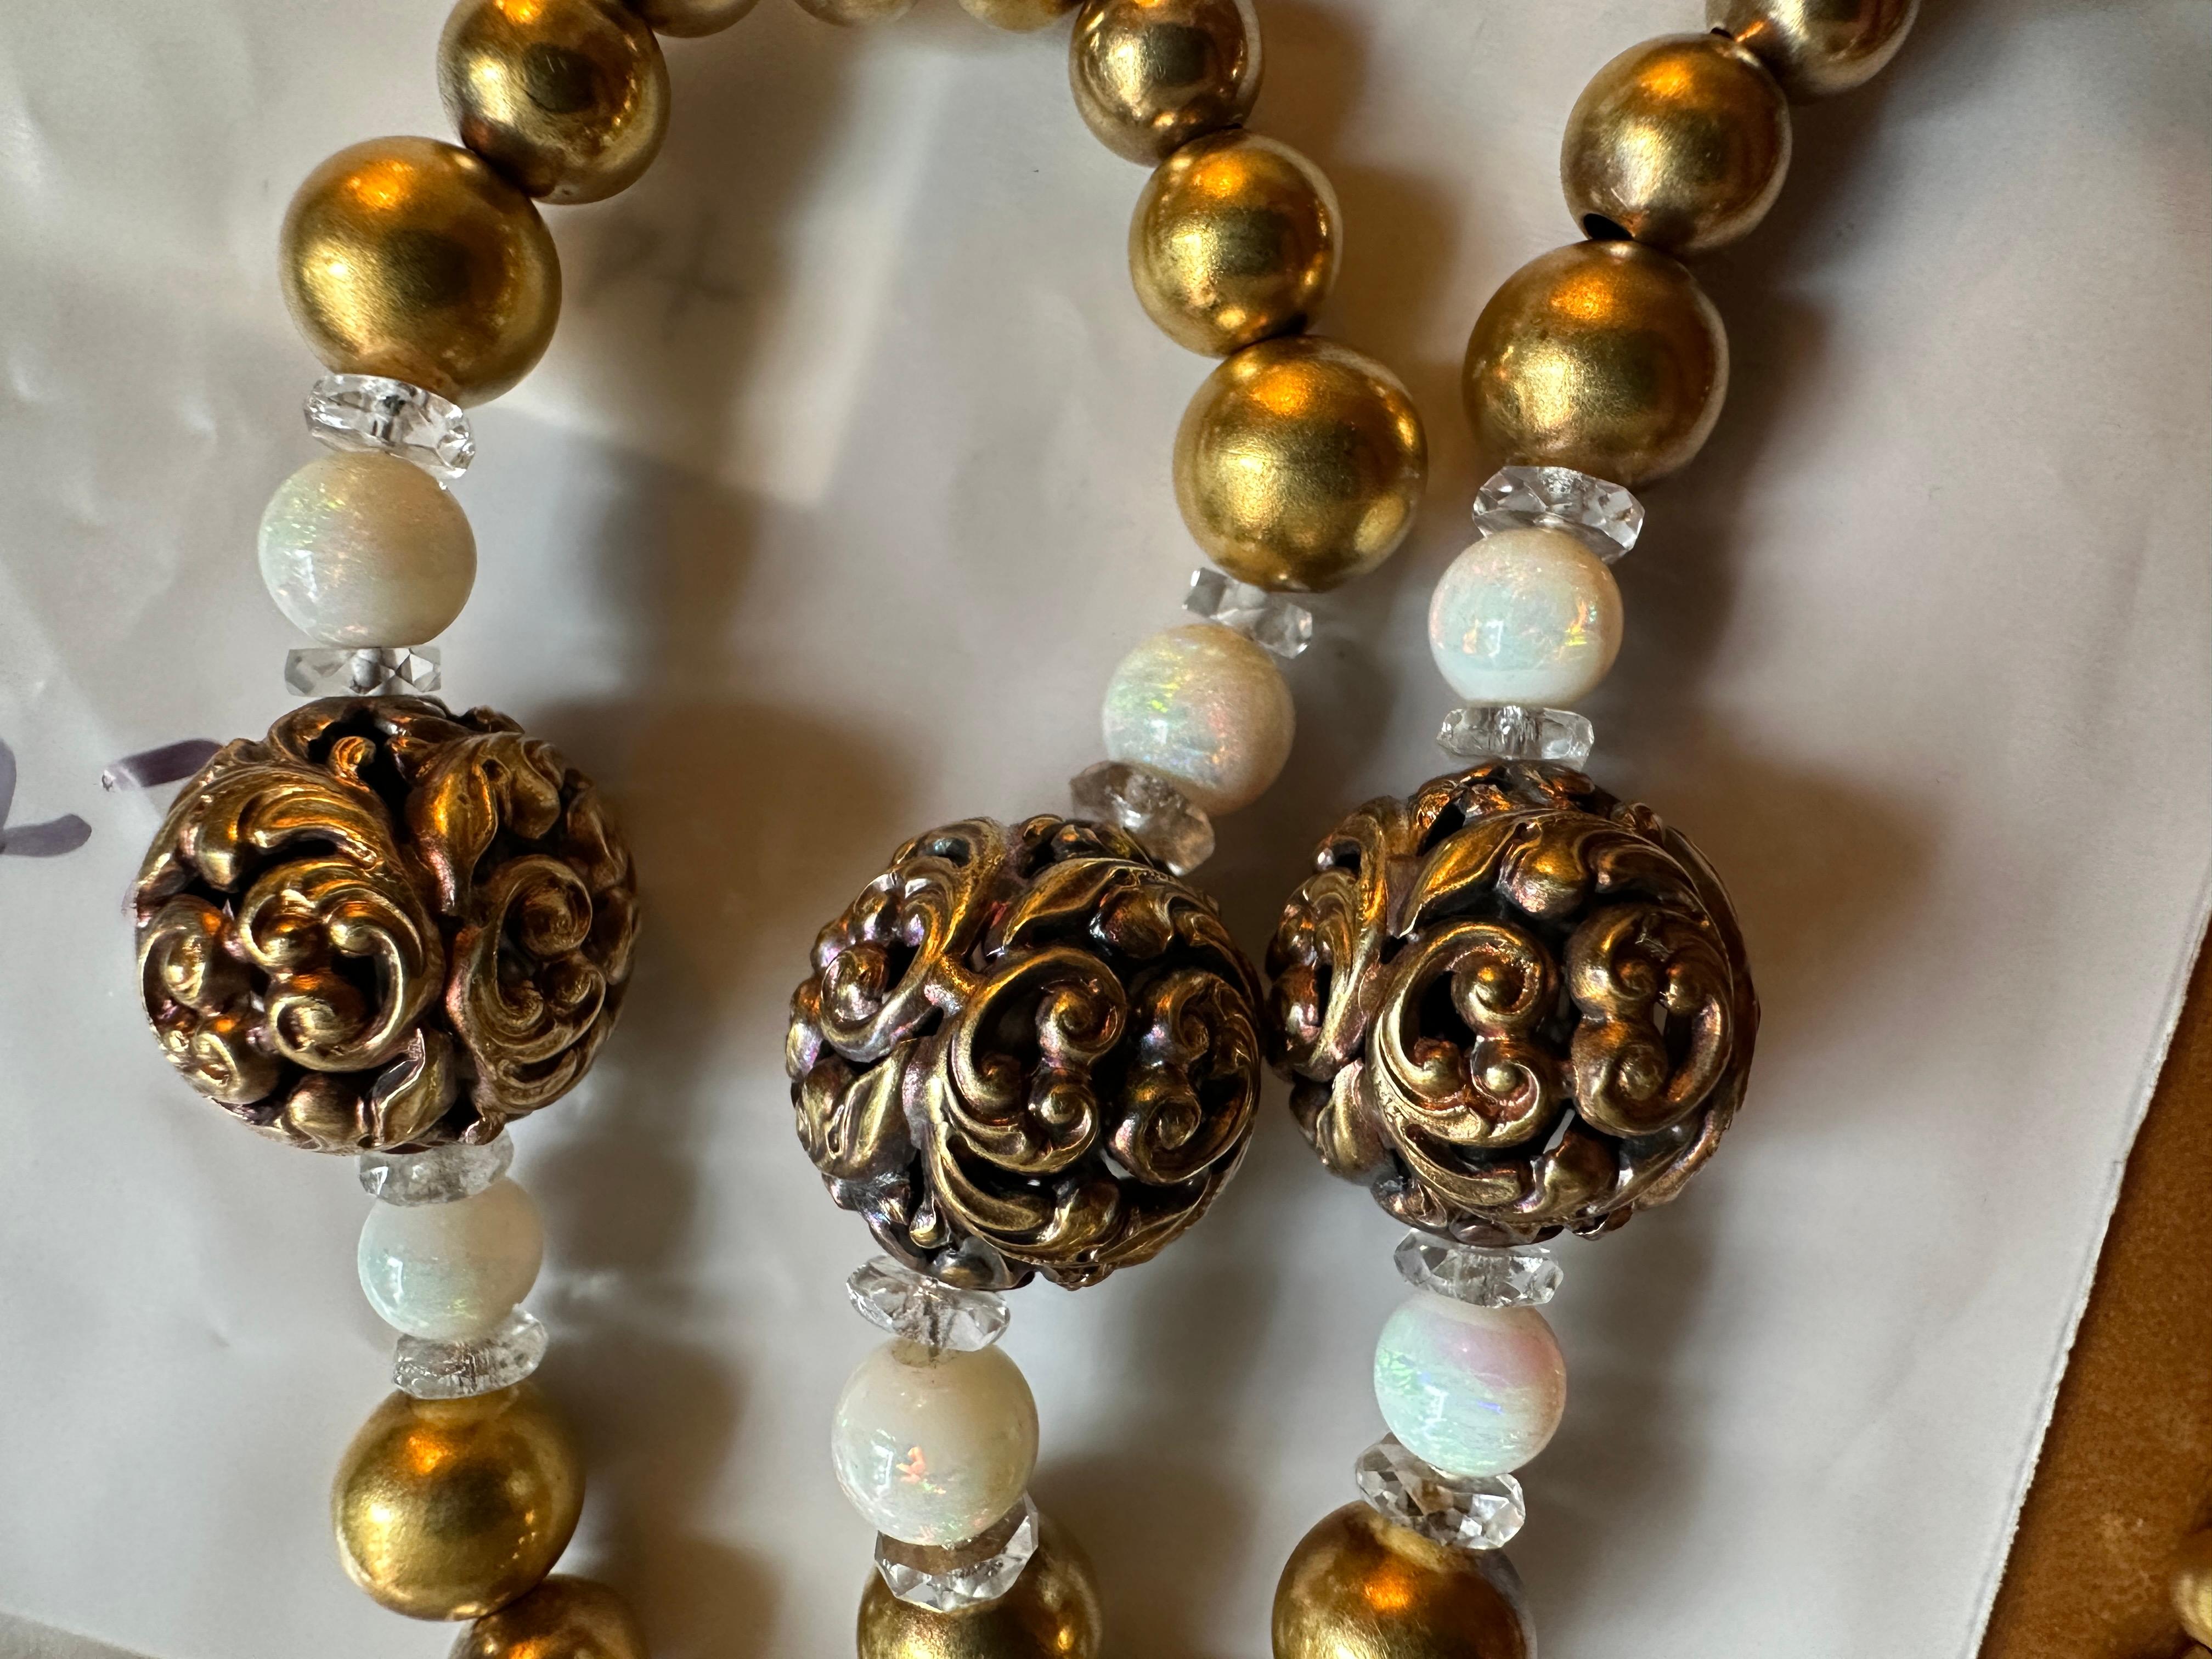 antique opal bead necklace